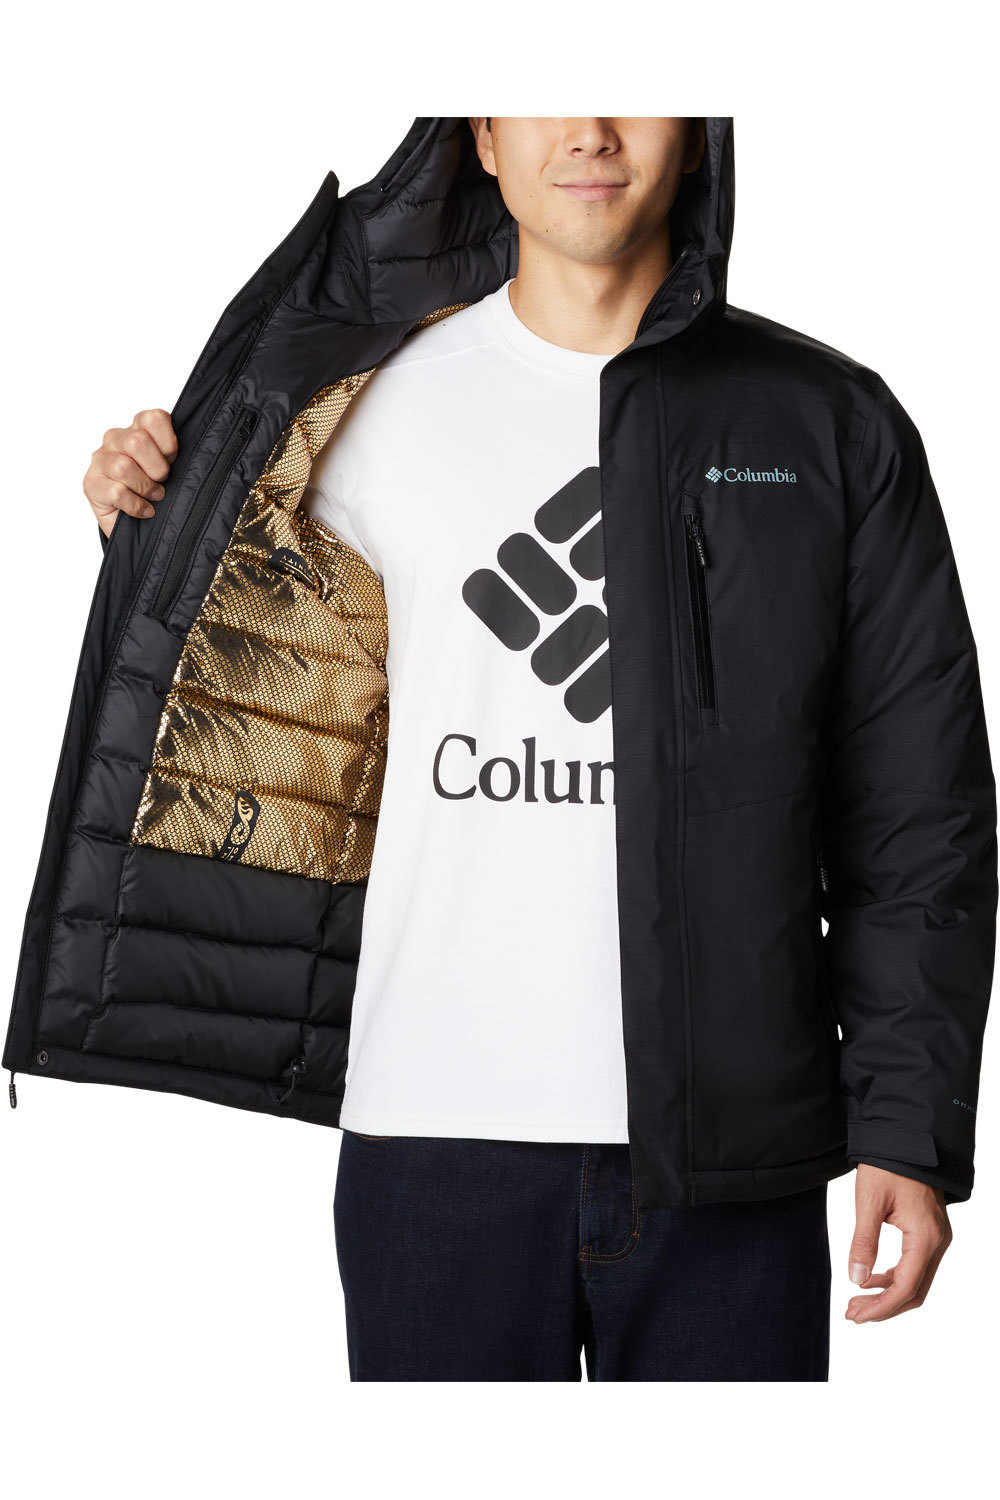 Columbia chaqueta impermeable insulada hombre Oak Harbor Insulated Jacket vista trasera